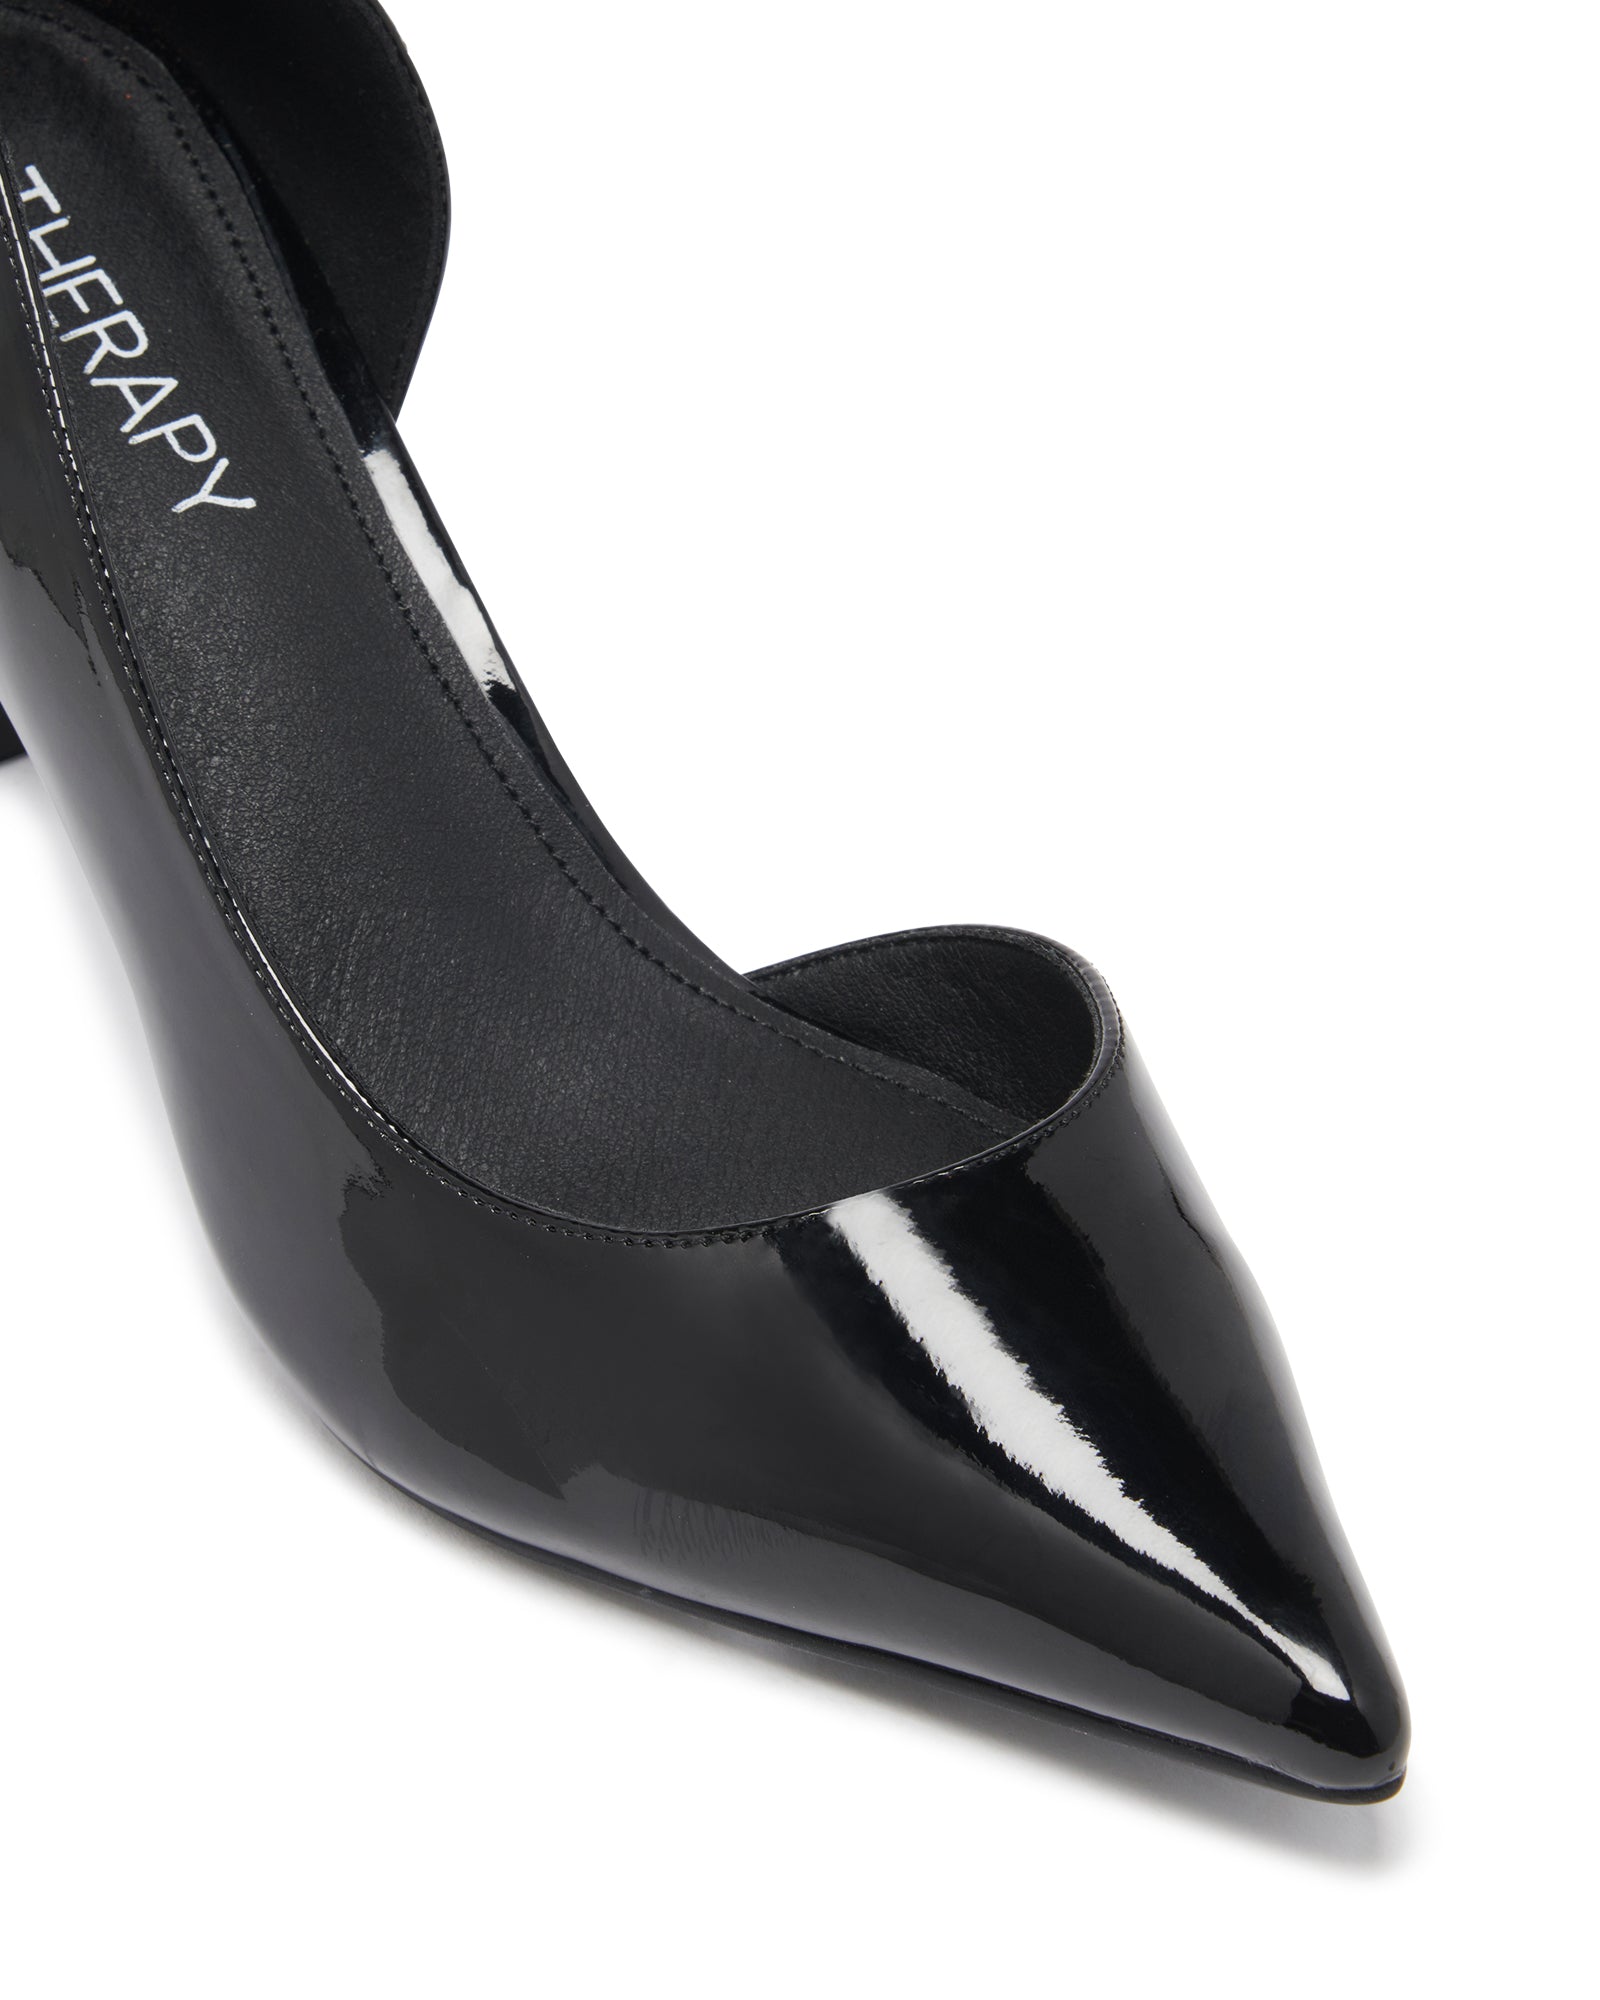 Therapy Shoes Scandal Black Patent | Women's Heels | Pumps | Stiletto